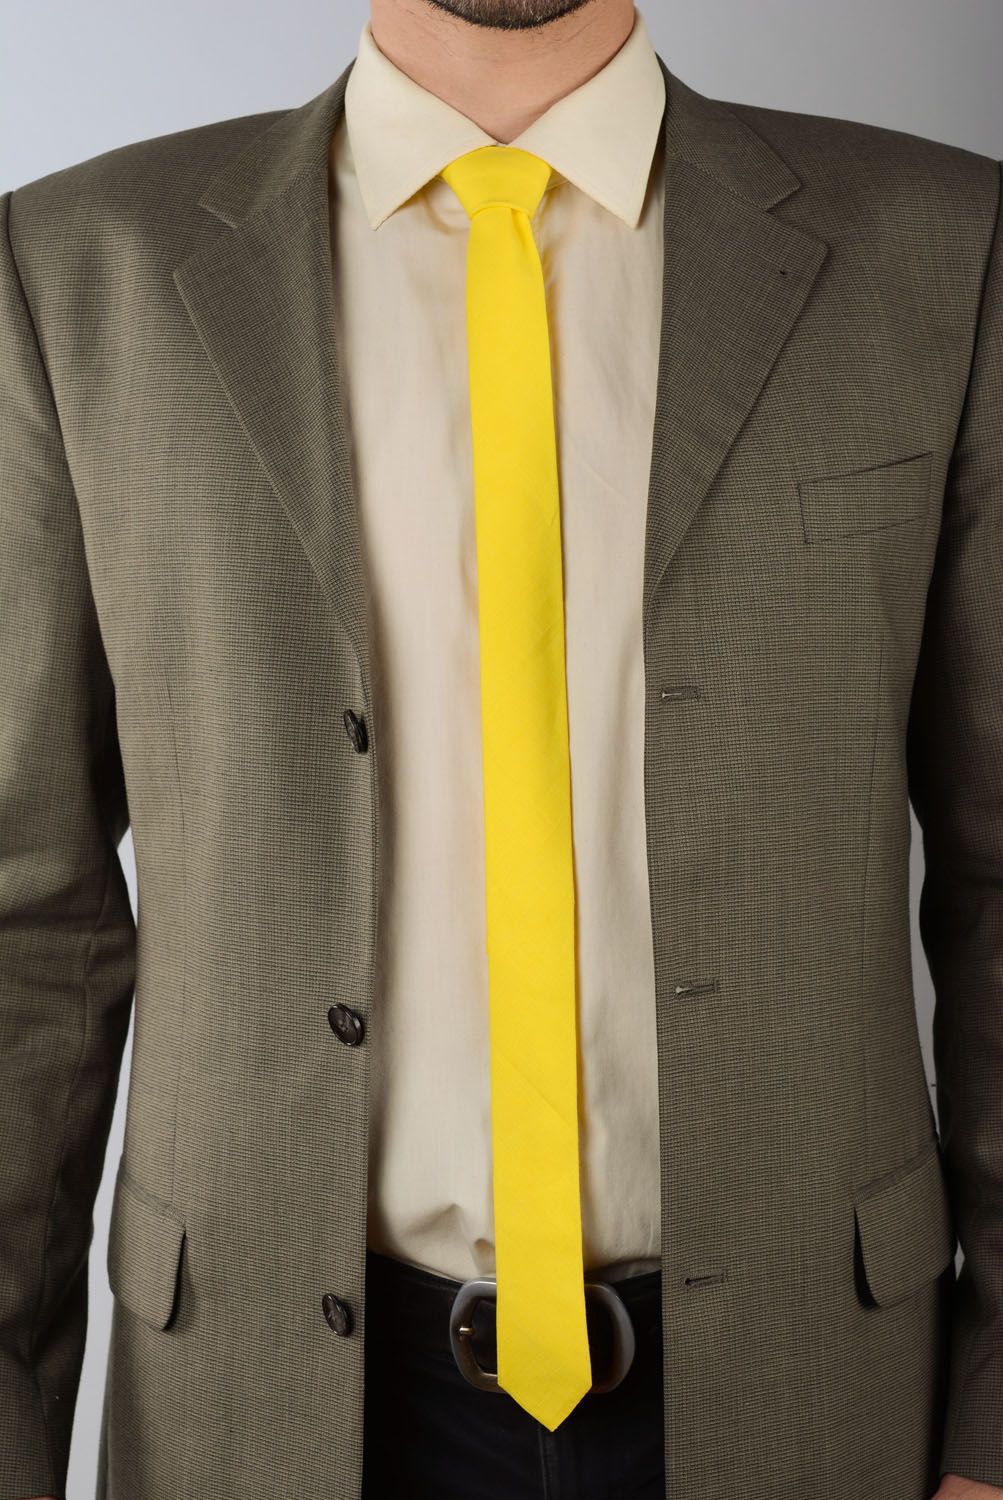 Corbata de hombre amarilla foto 1